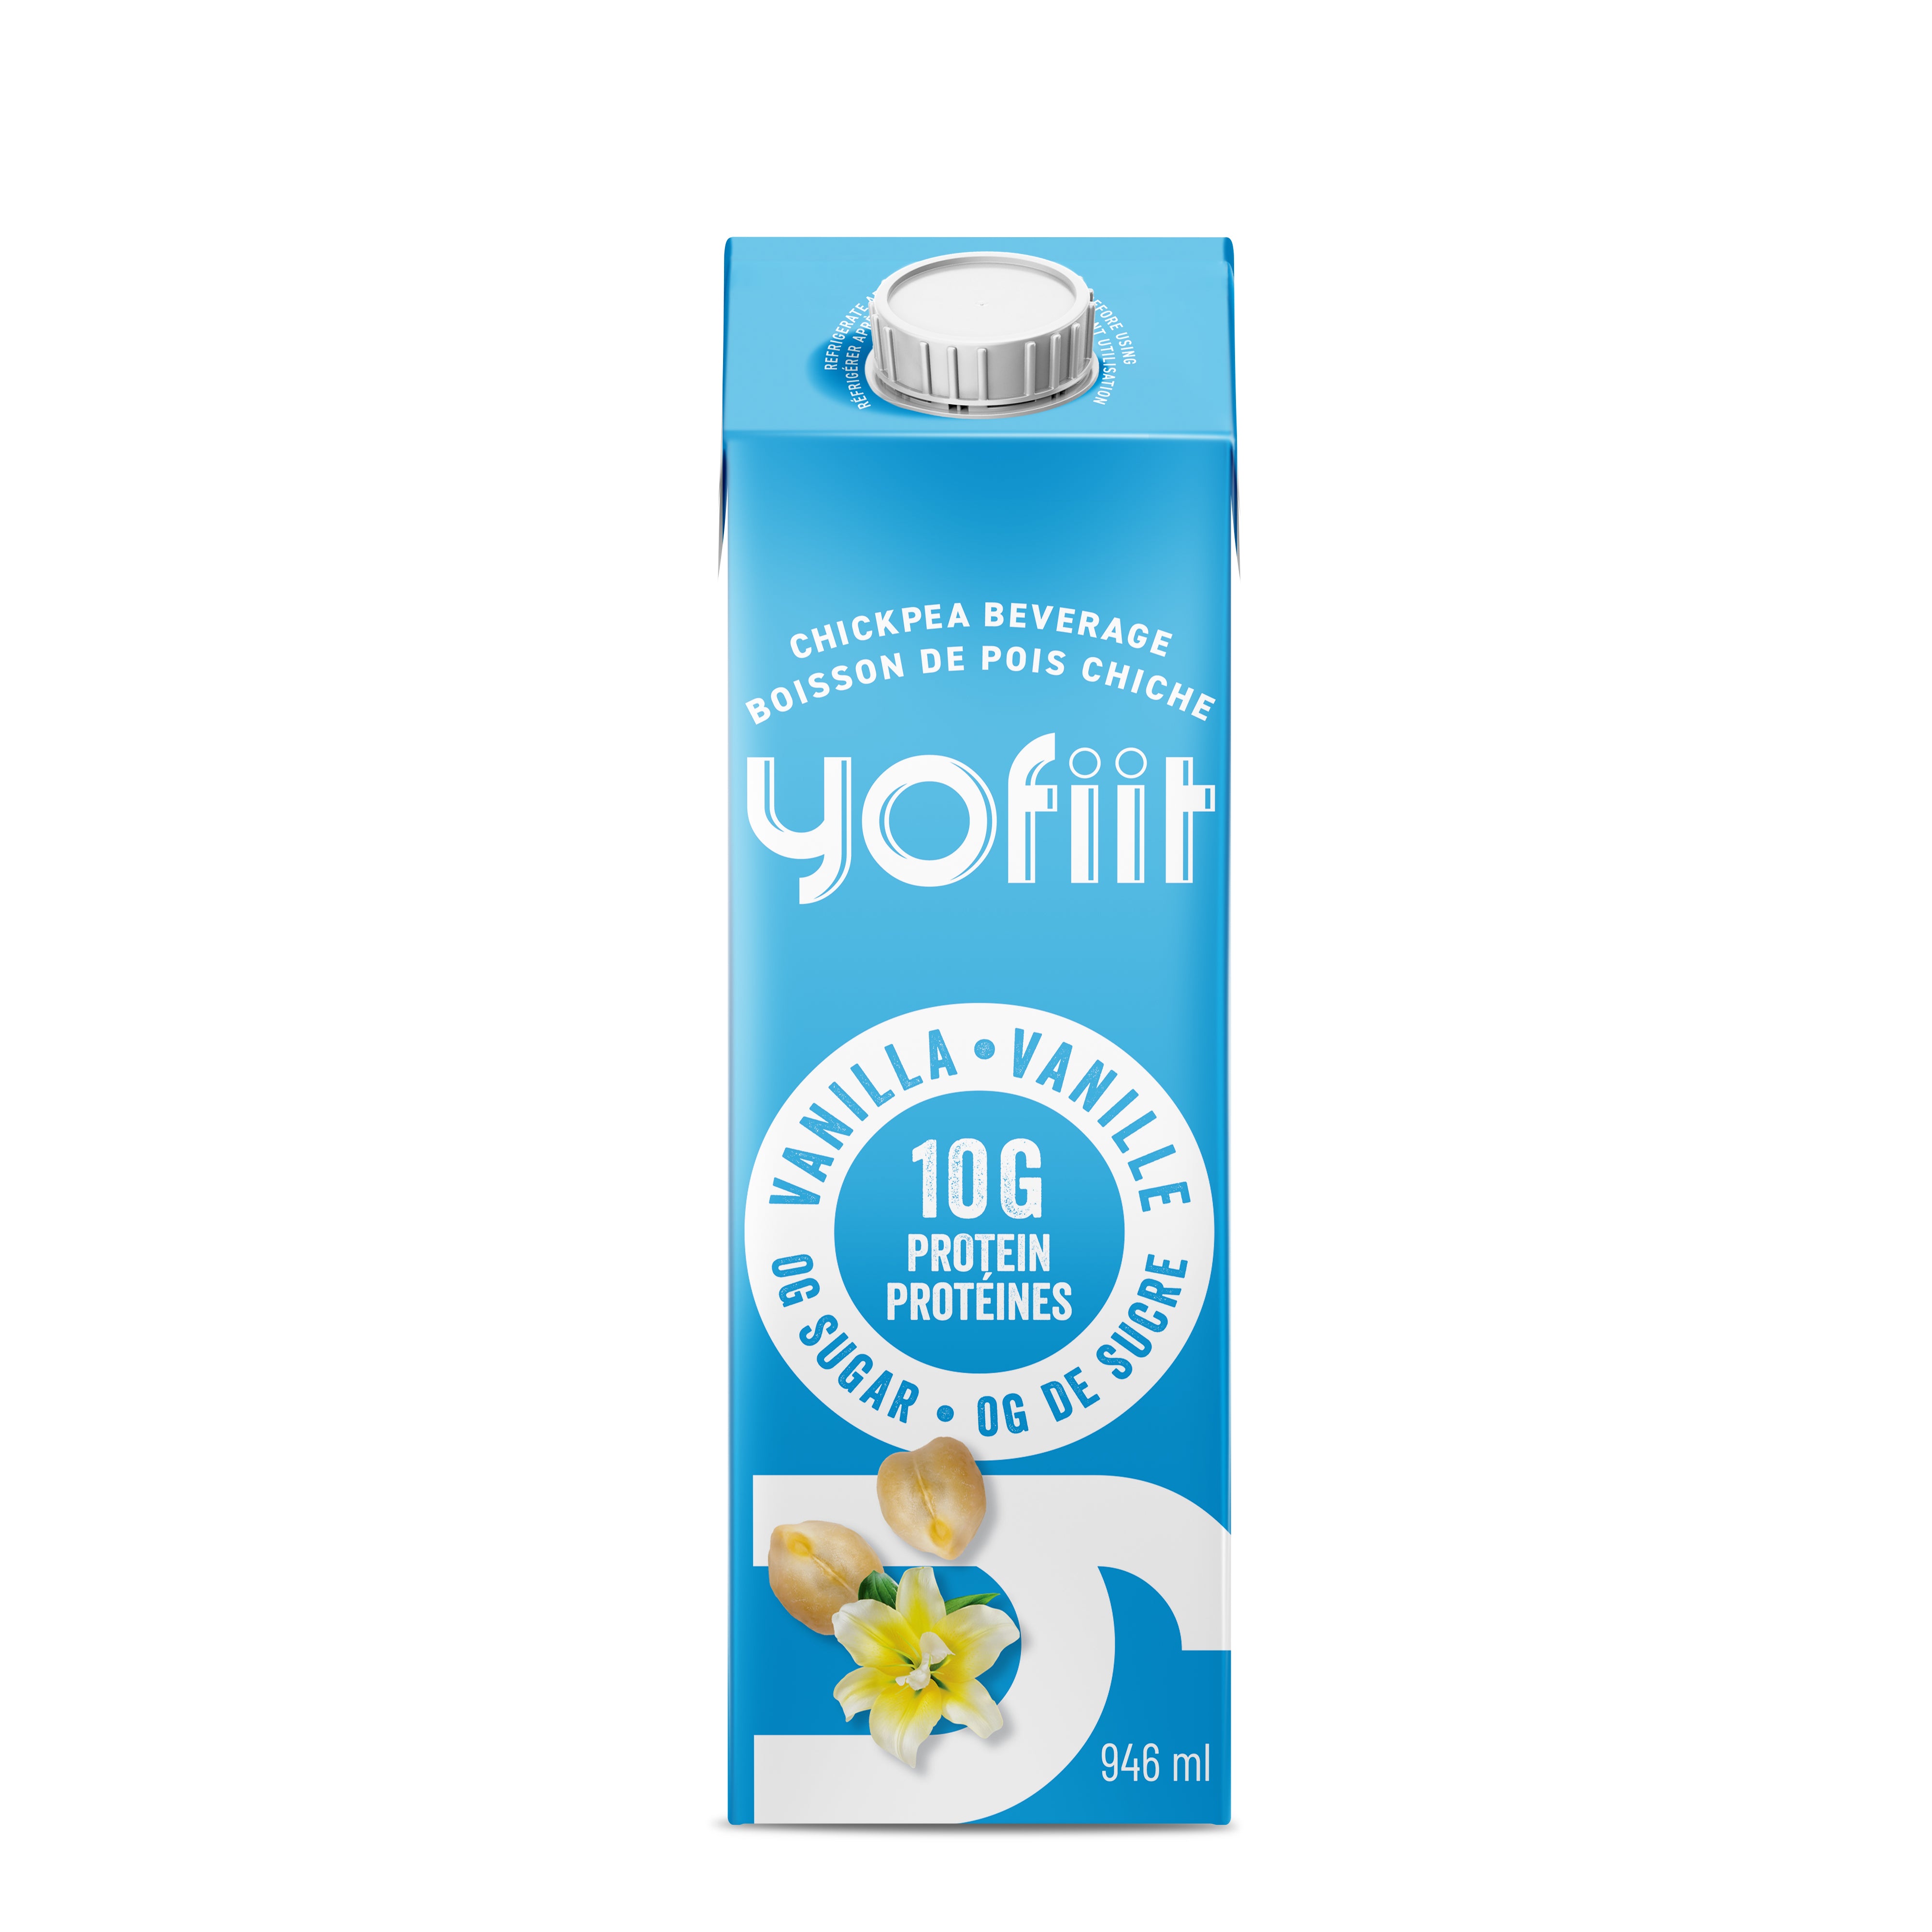 Yofiit – High protein chickpea milk w. flax (vanilla unsweetened) - 12 cartons